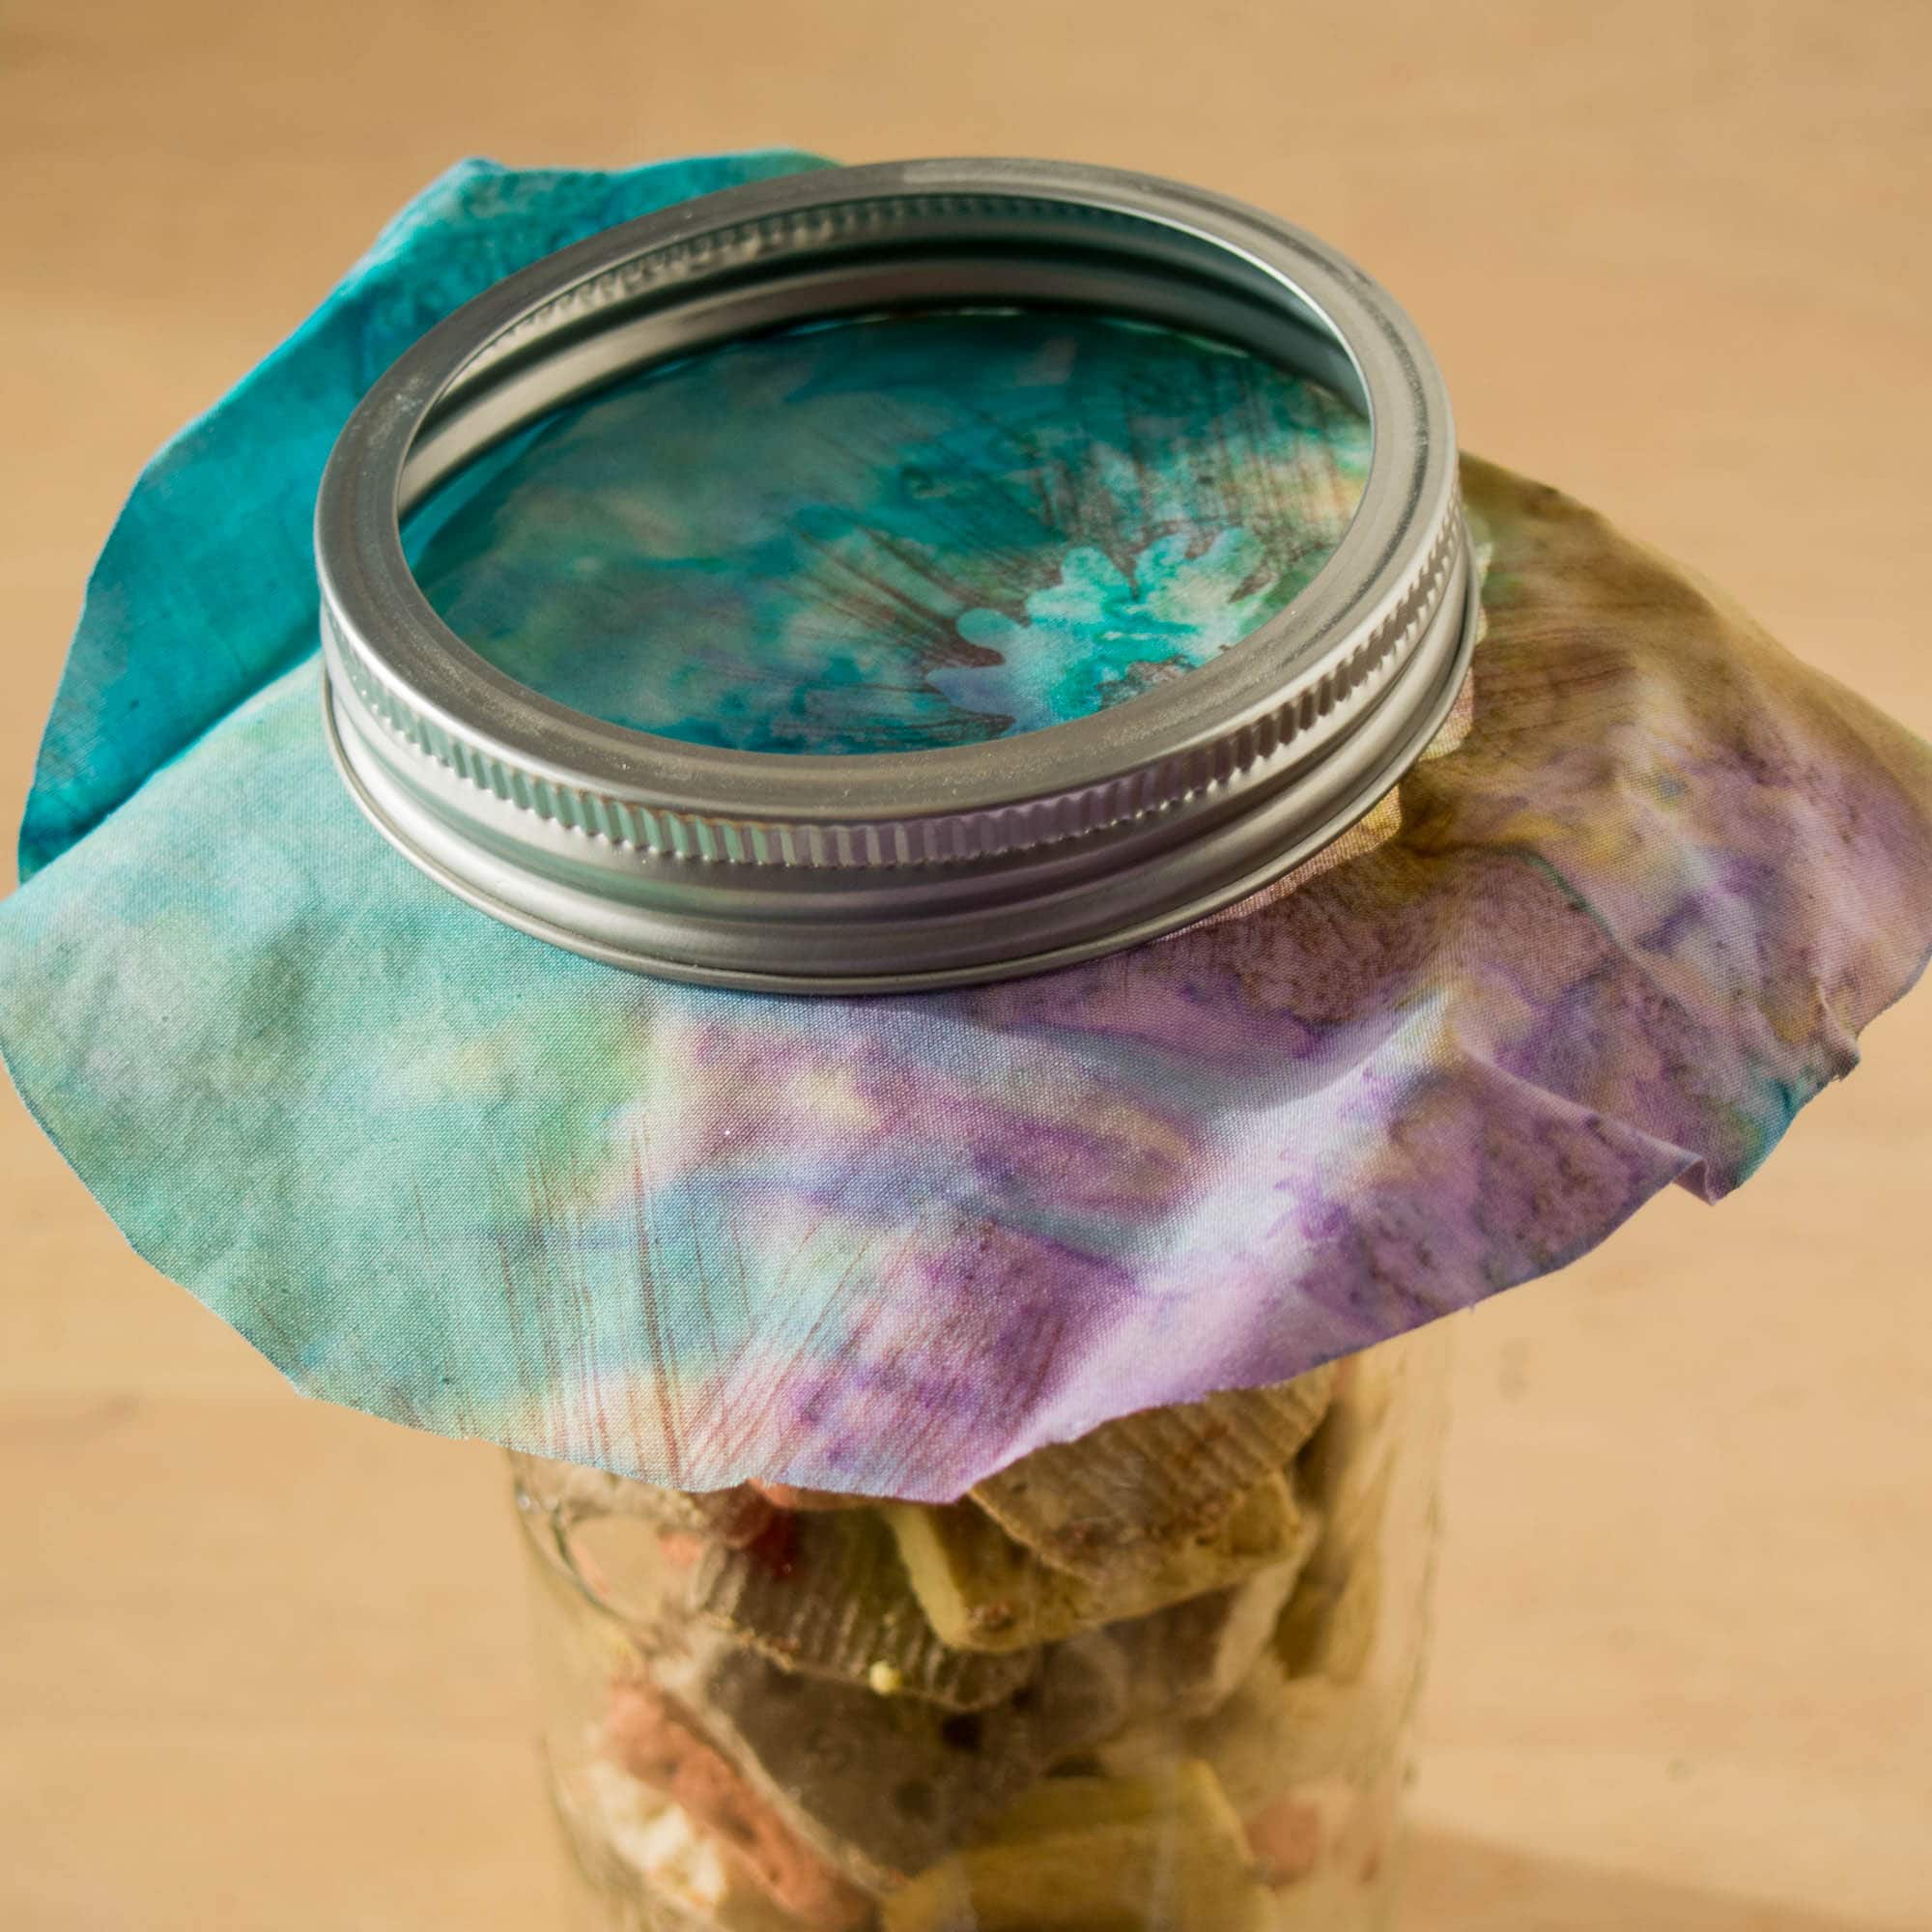 Putting fabric on top of the doggie treat jar